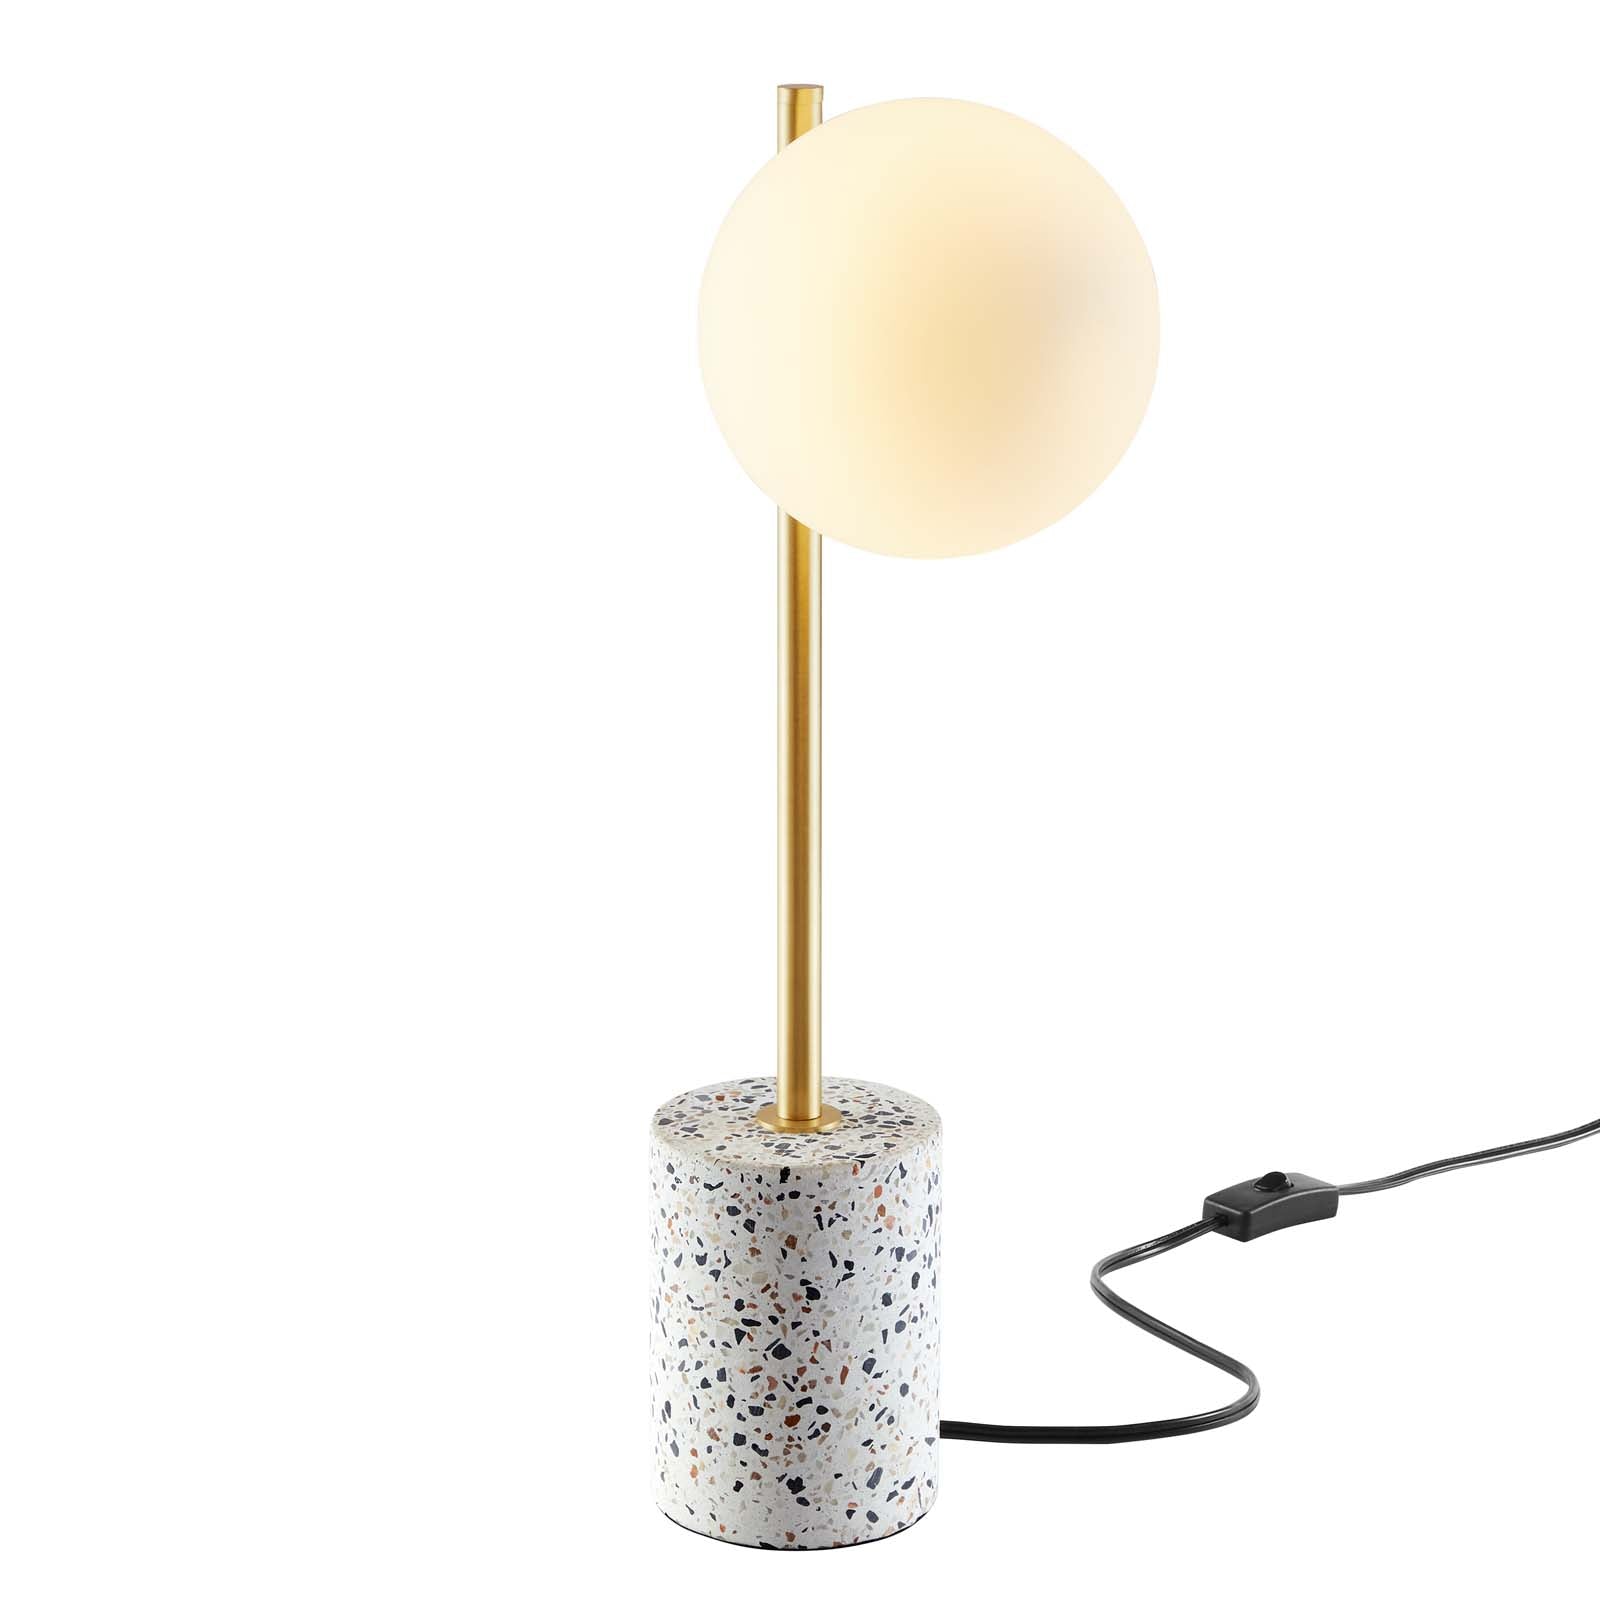 Logic Terrazzo Table Lamp - East Shore Modern Home Furnishings